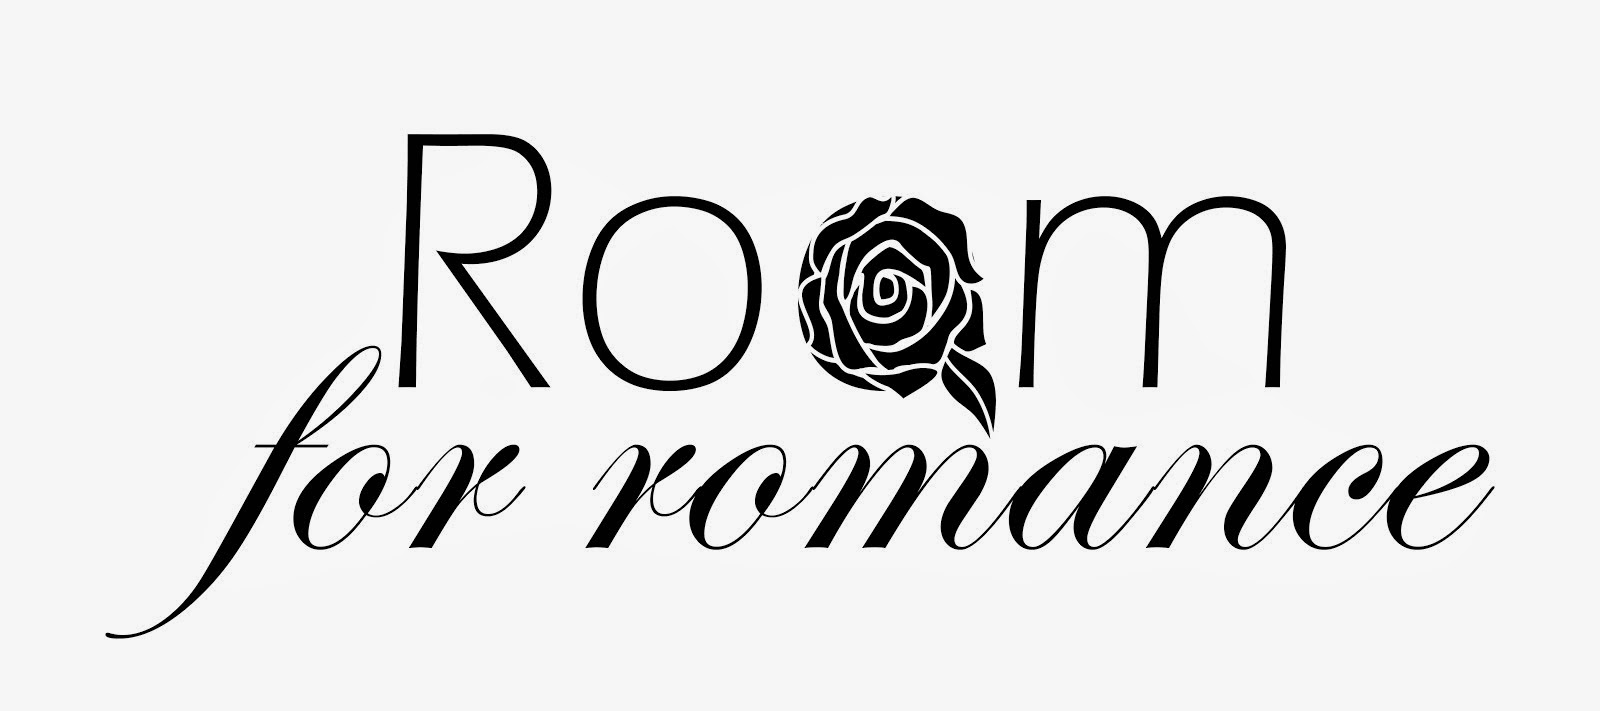 Room for romance